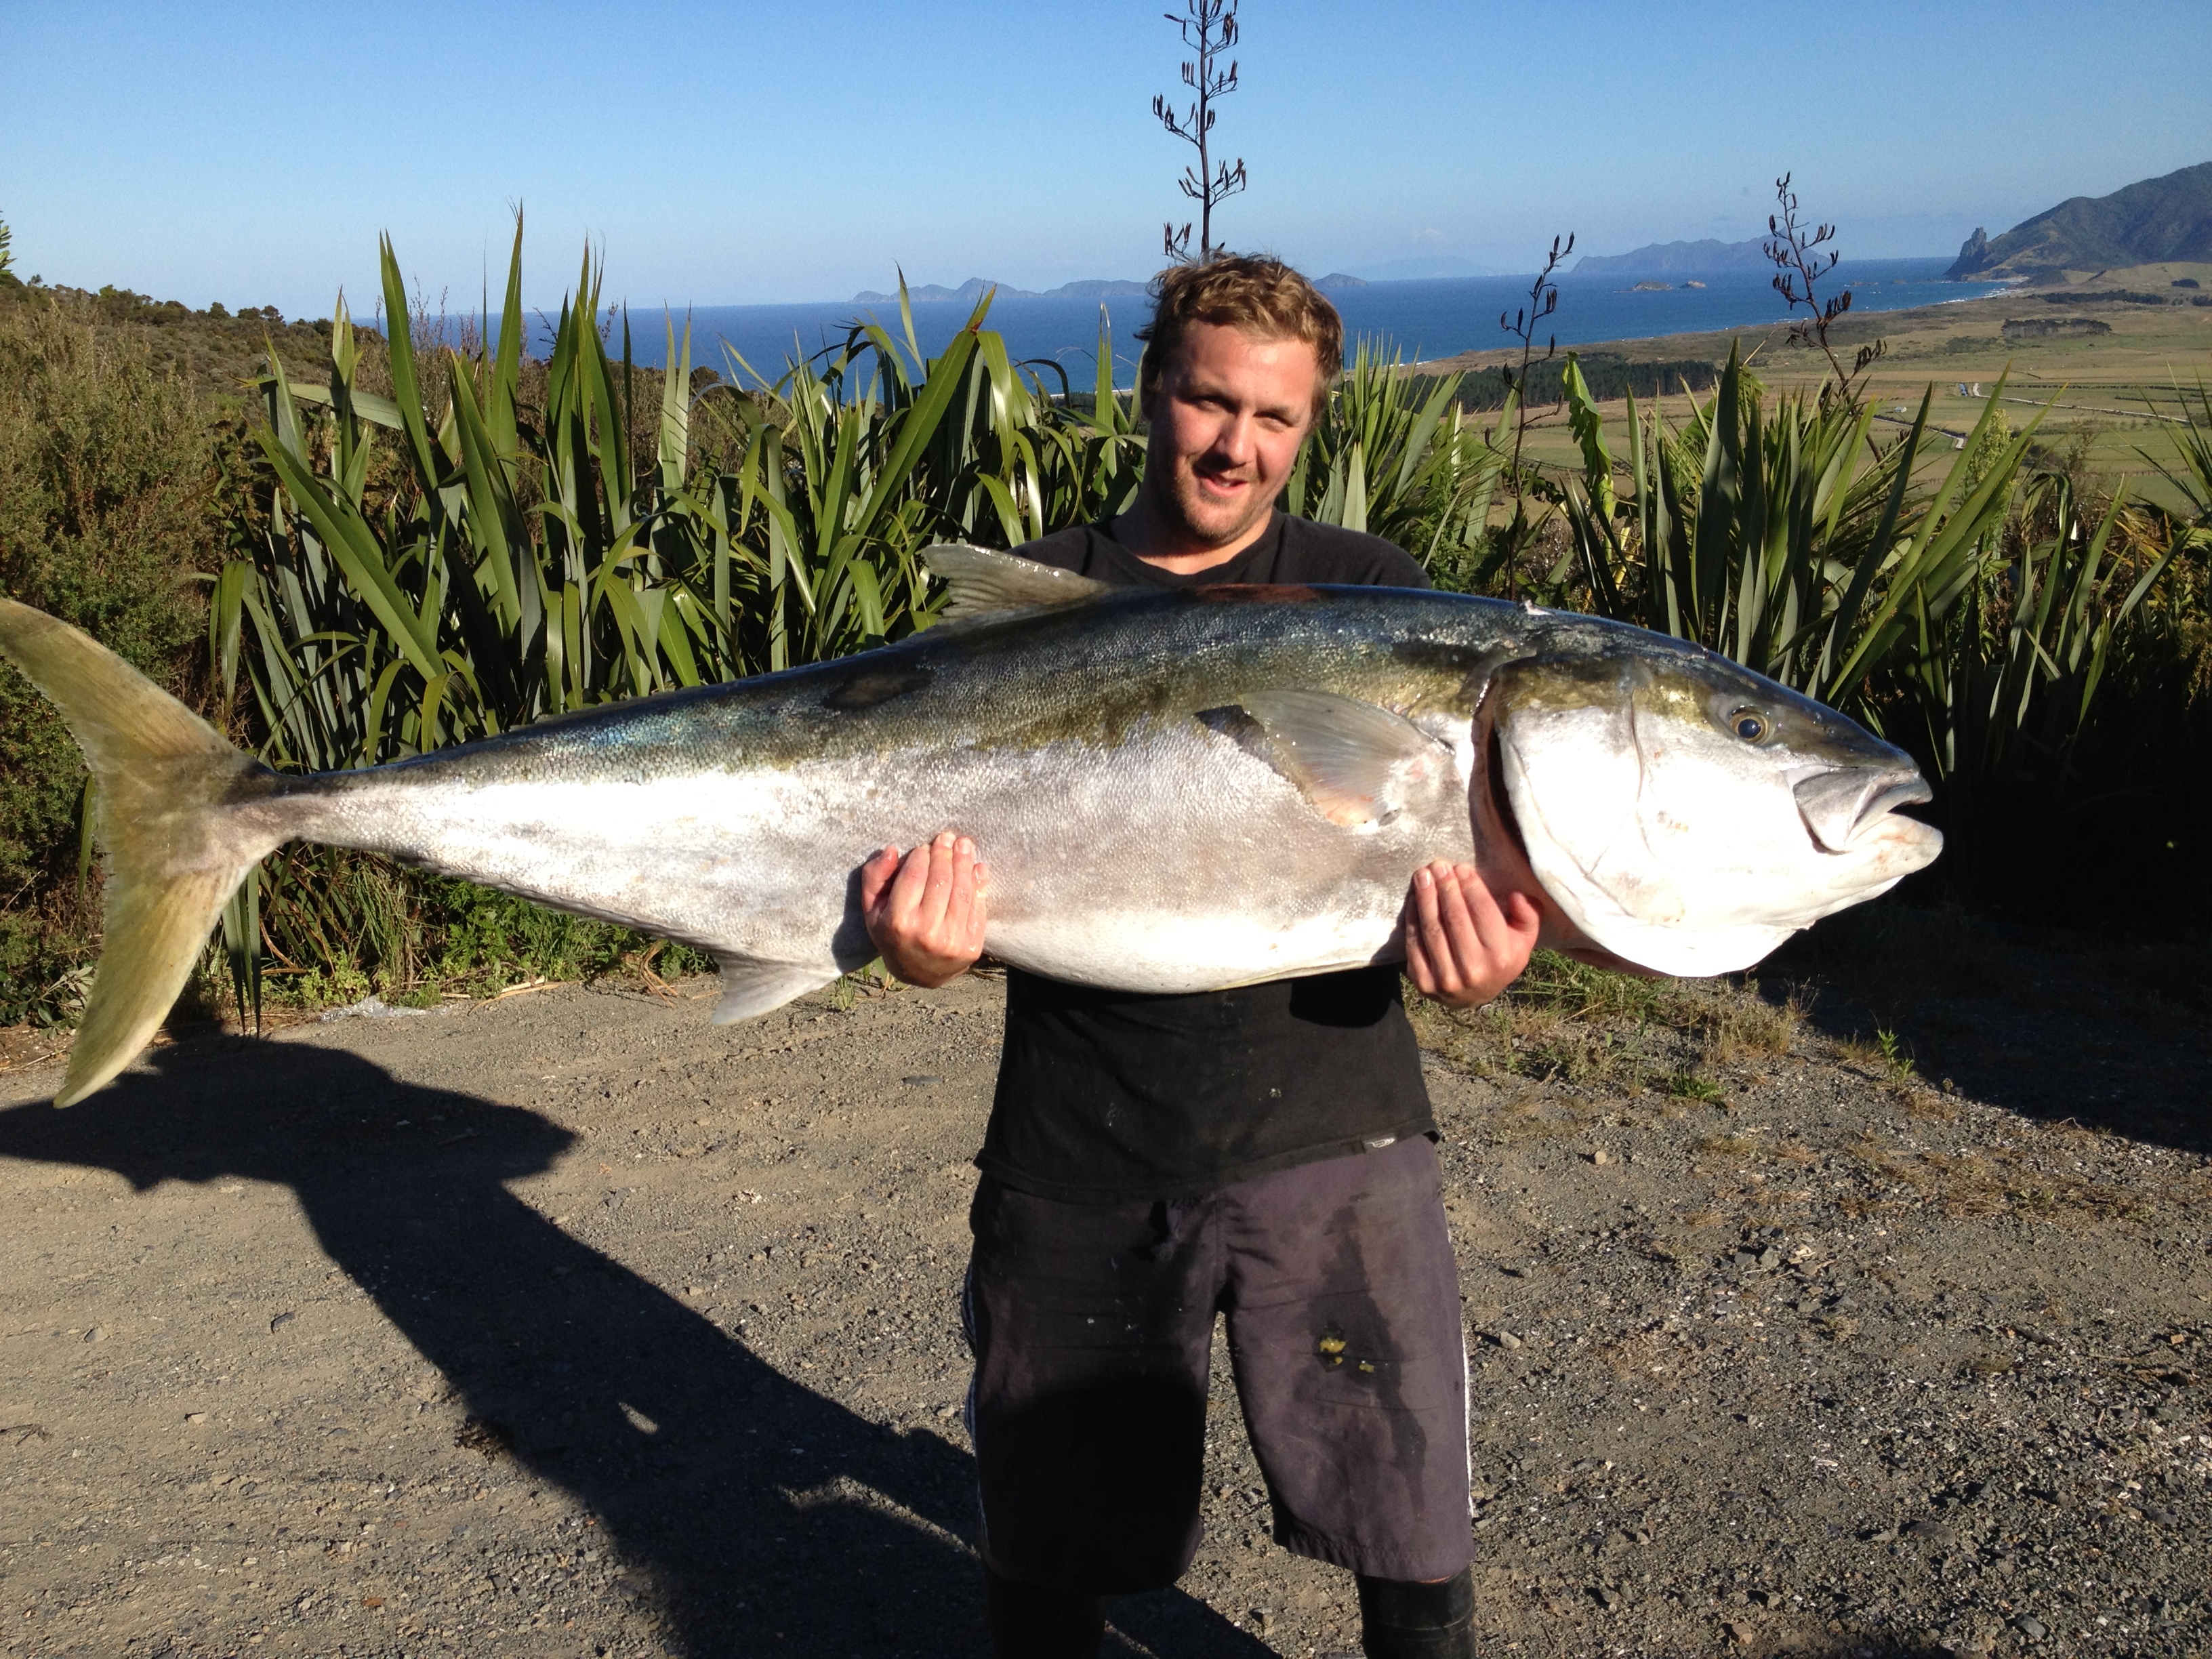 Giant kingi catch breaks national spearing record - NZ Herald